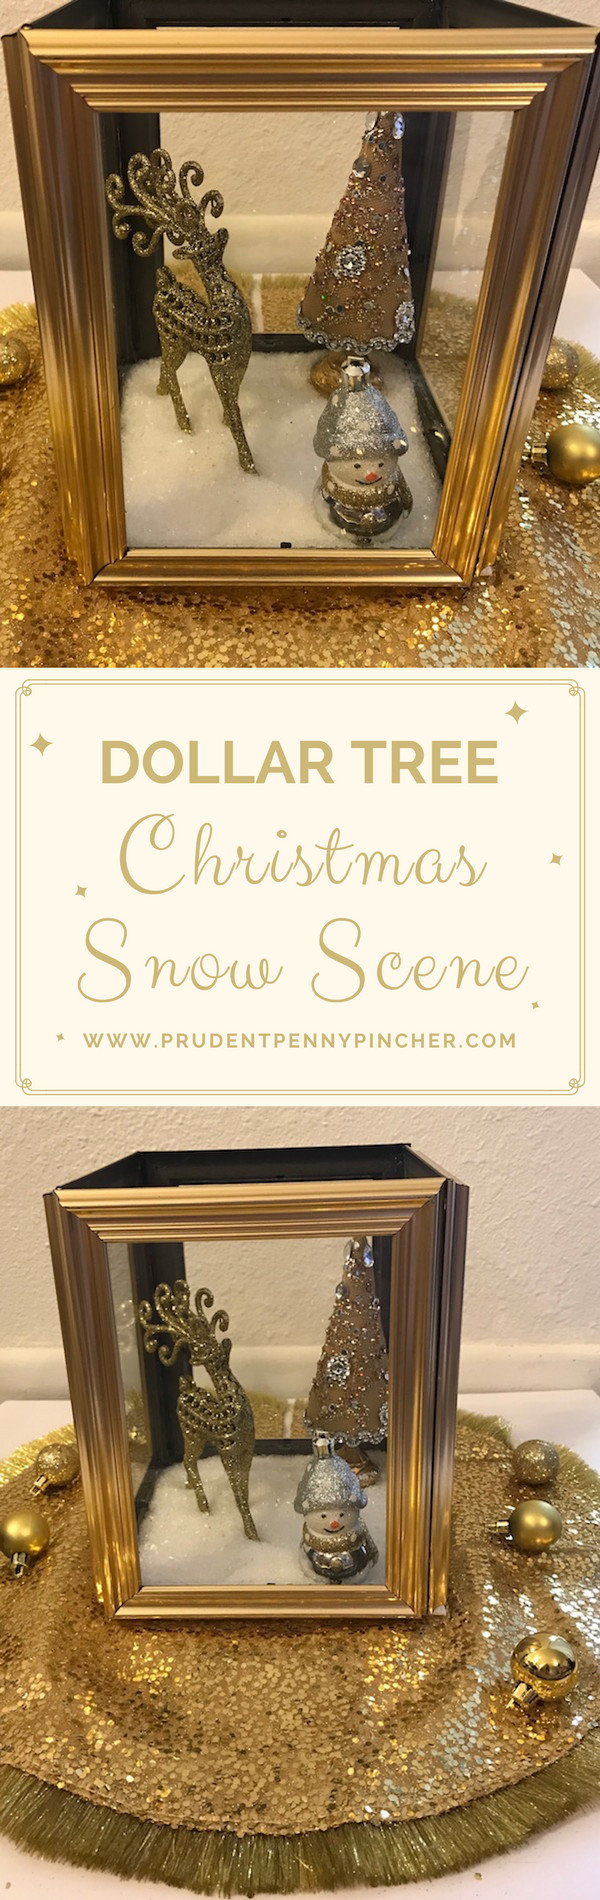 Dollar Tree DIY Christmas
 Dollar Tree Christmas Decor DIY Idea Prudent Penny Pincher